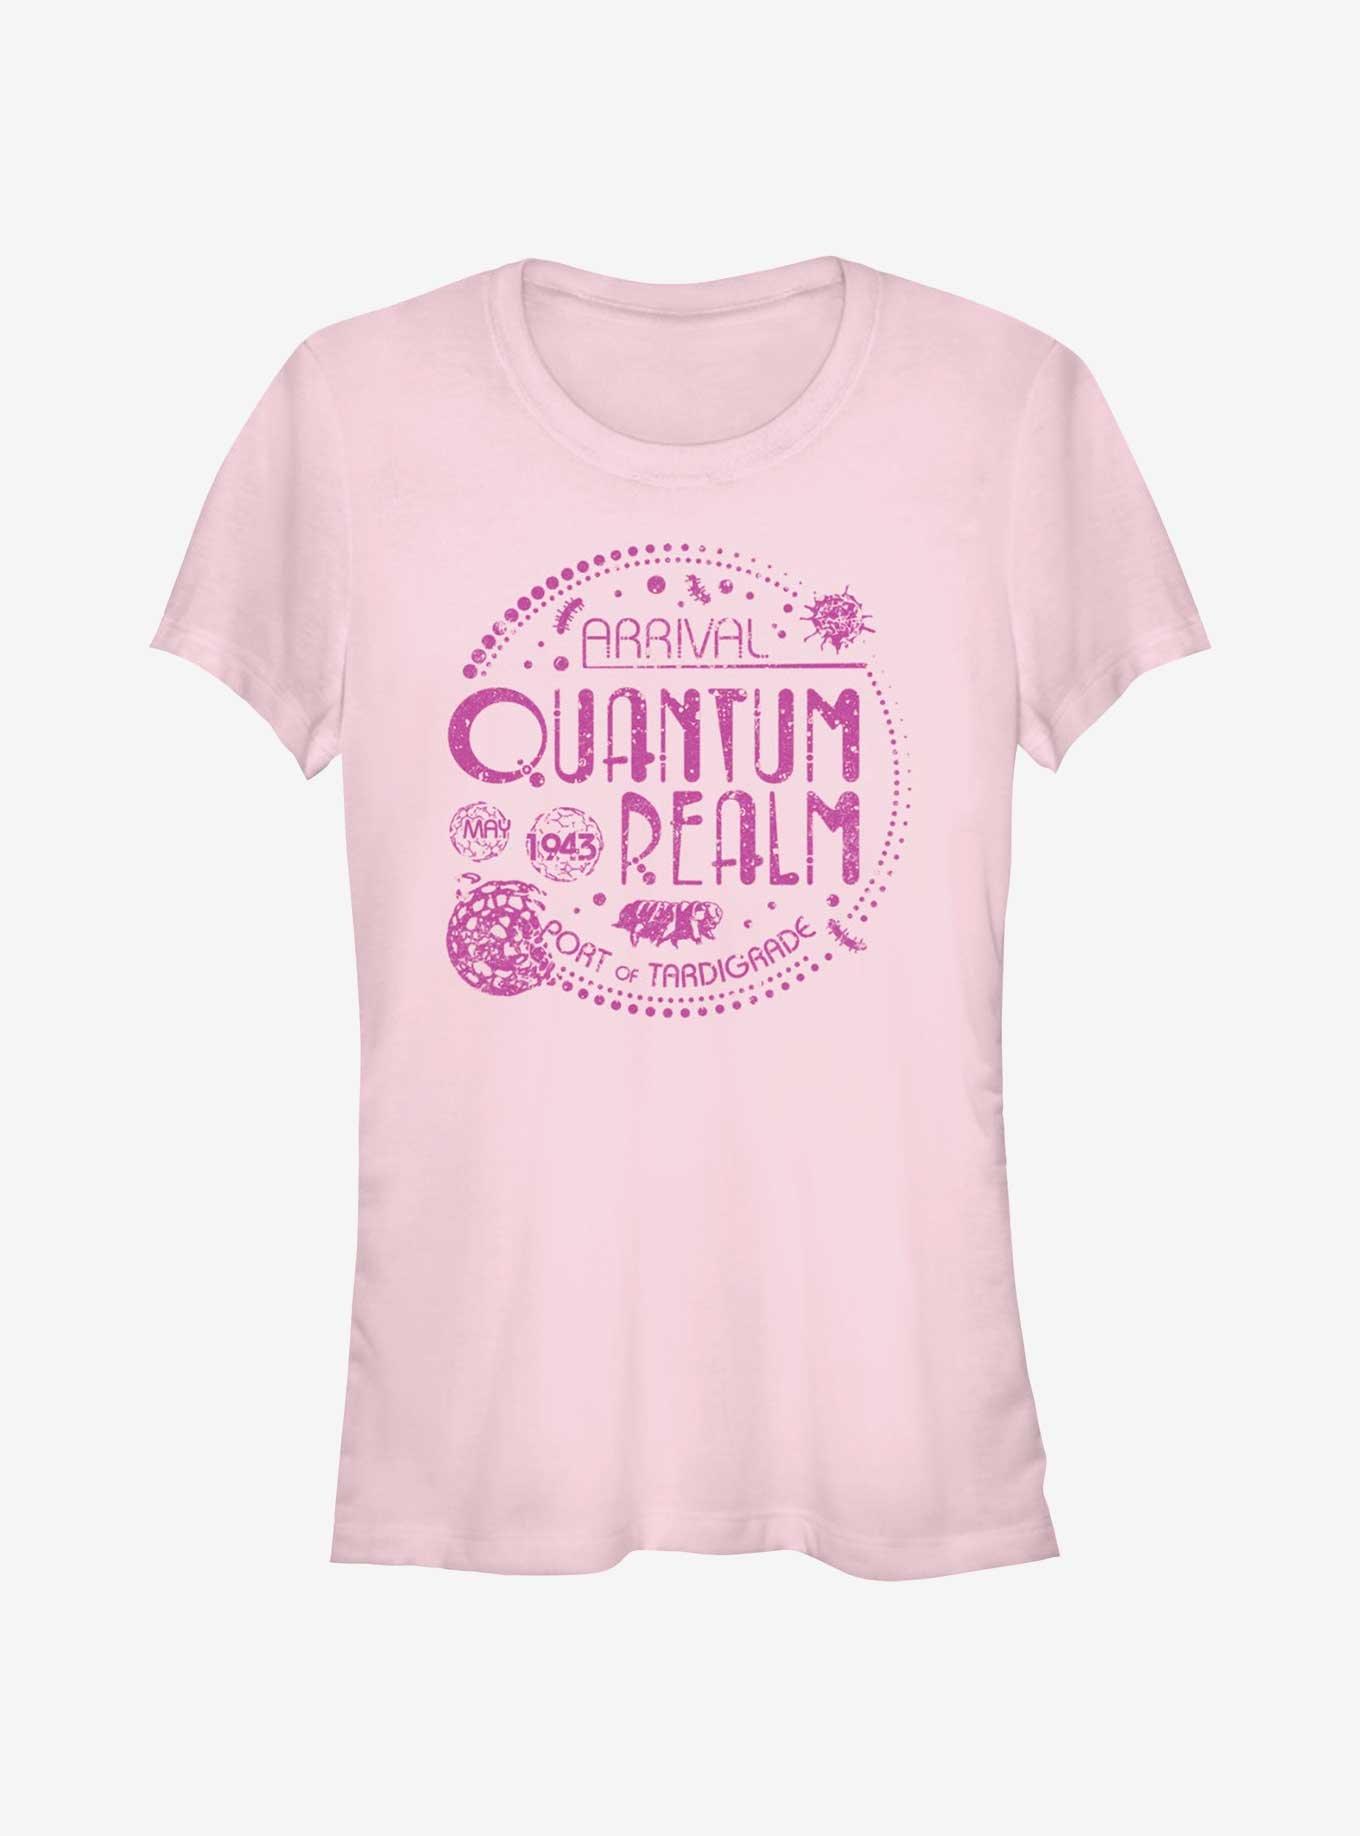 Marvel Avengers Arrival Quantum Realm Girls T-Shirt